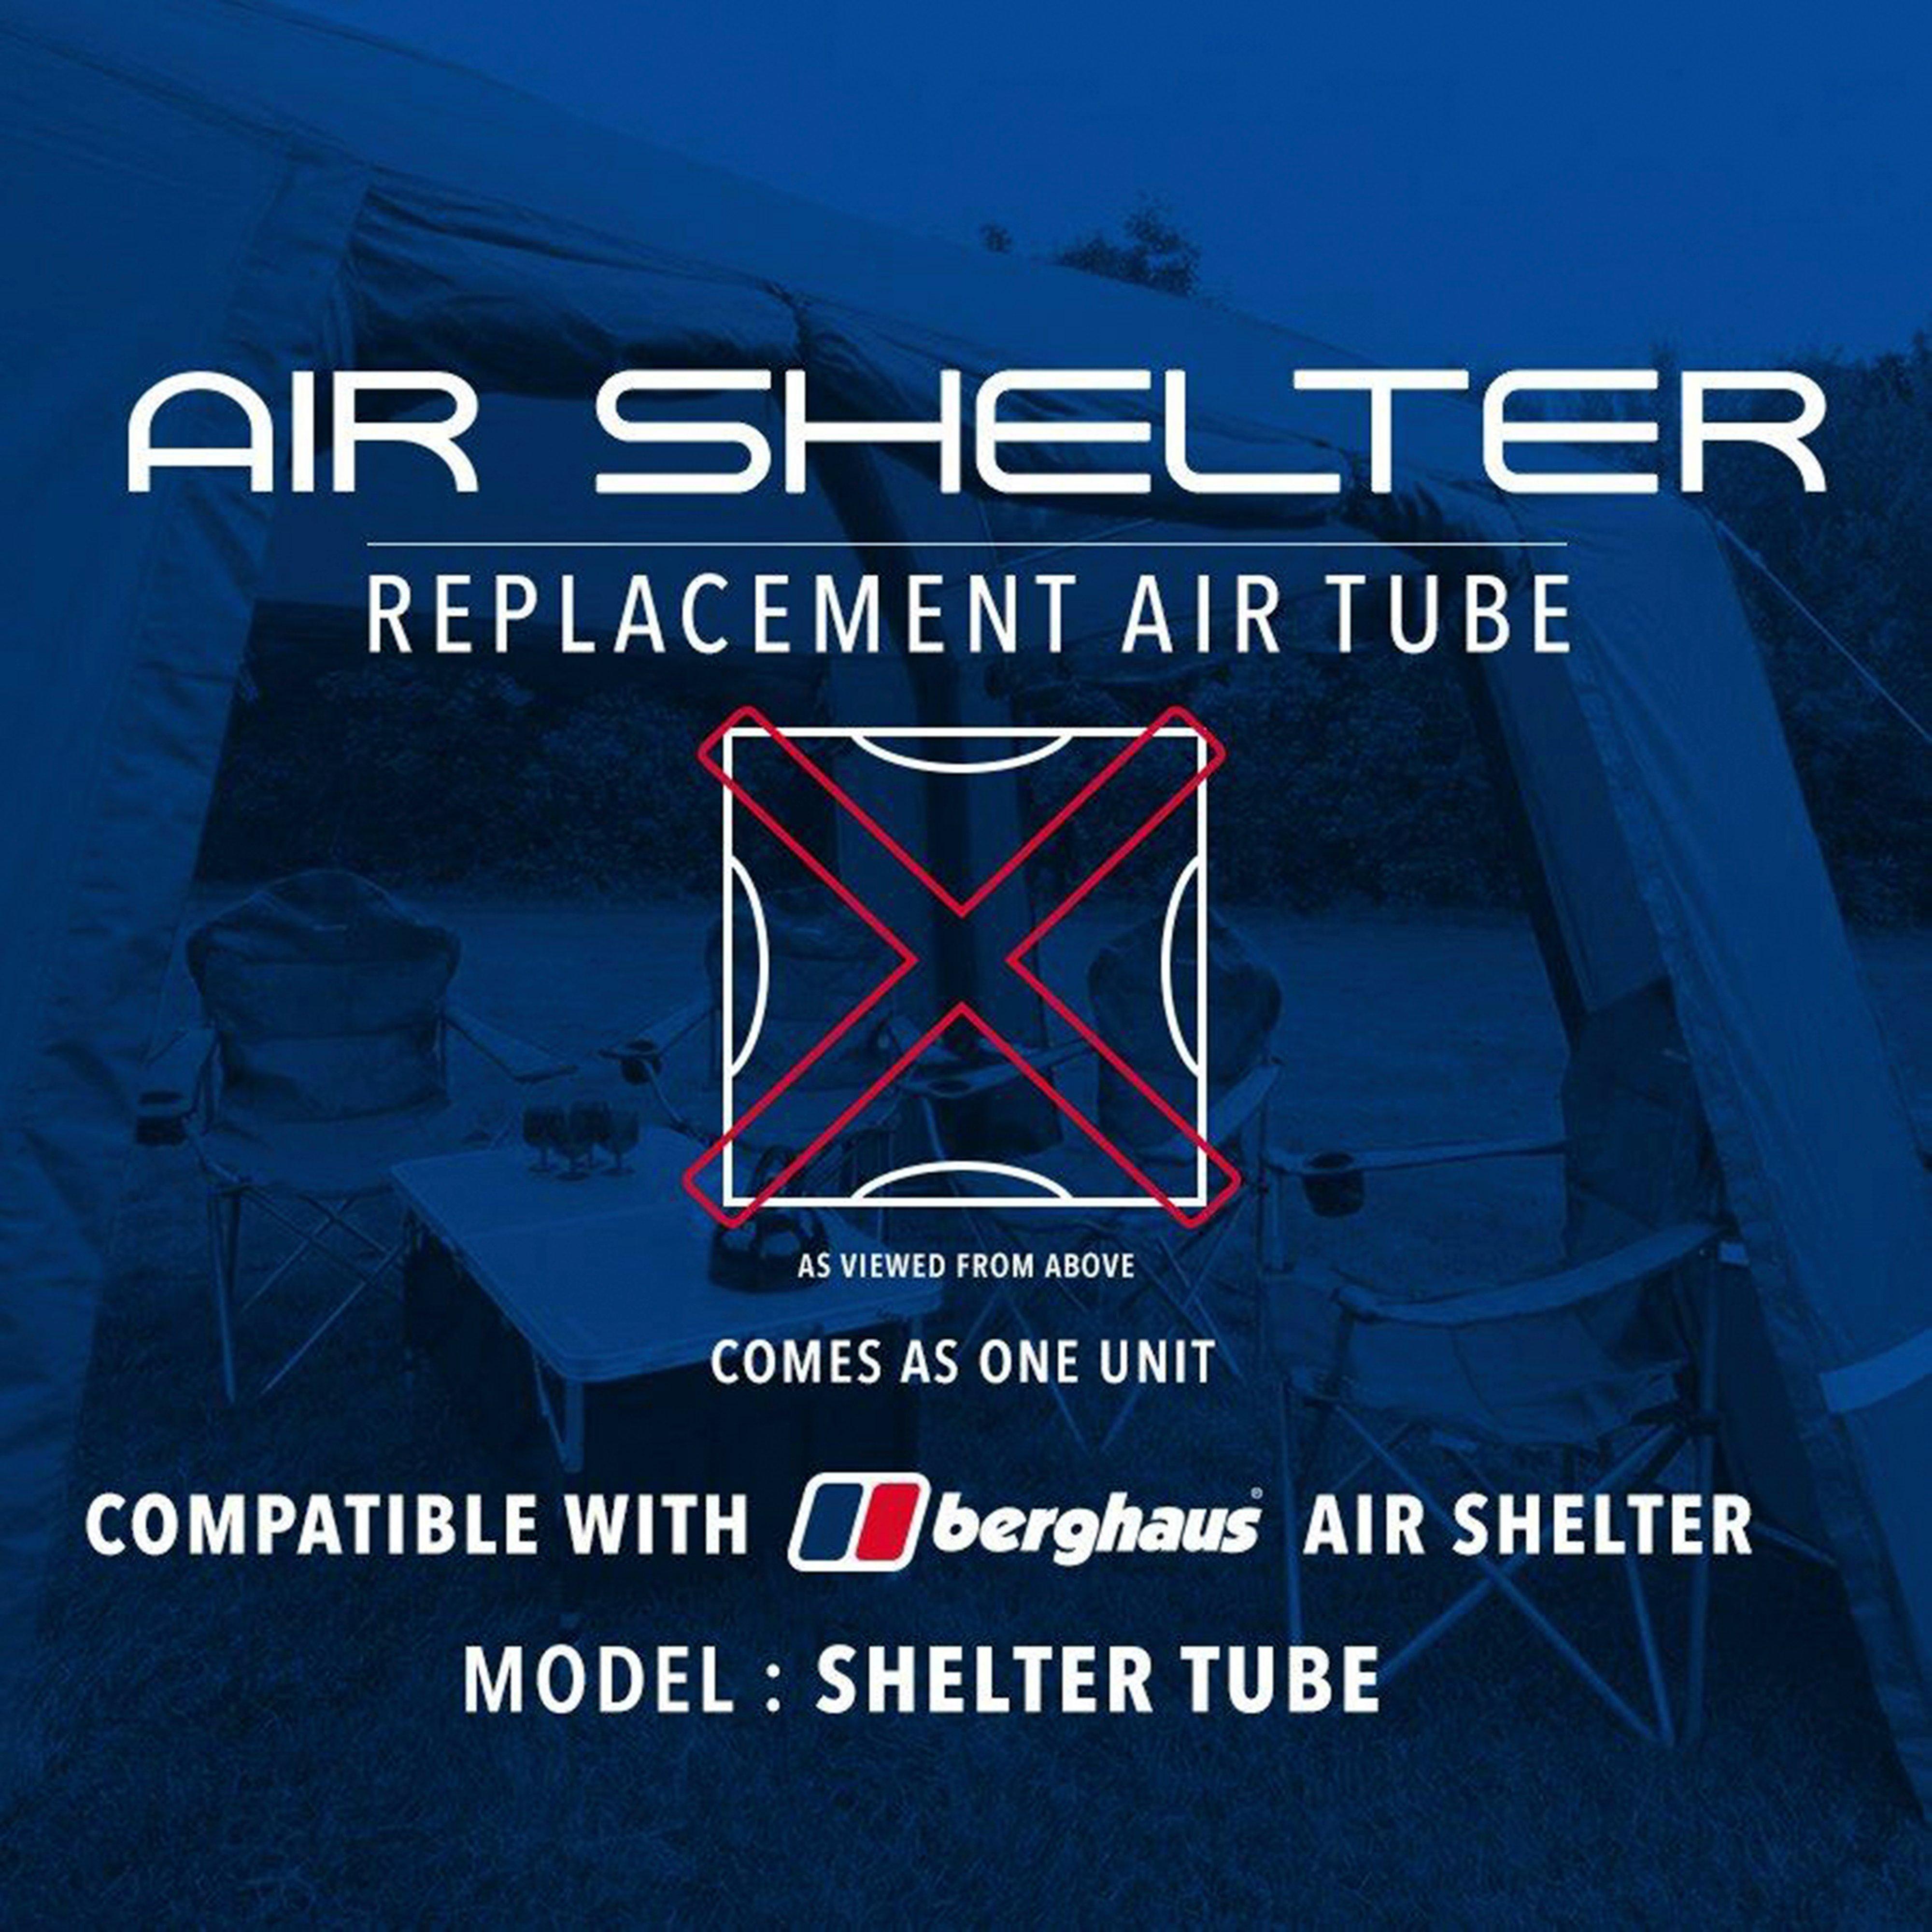 Berghaus Air Shelter Replacement Air Tube